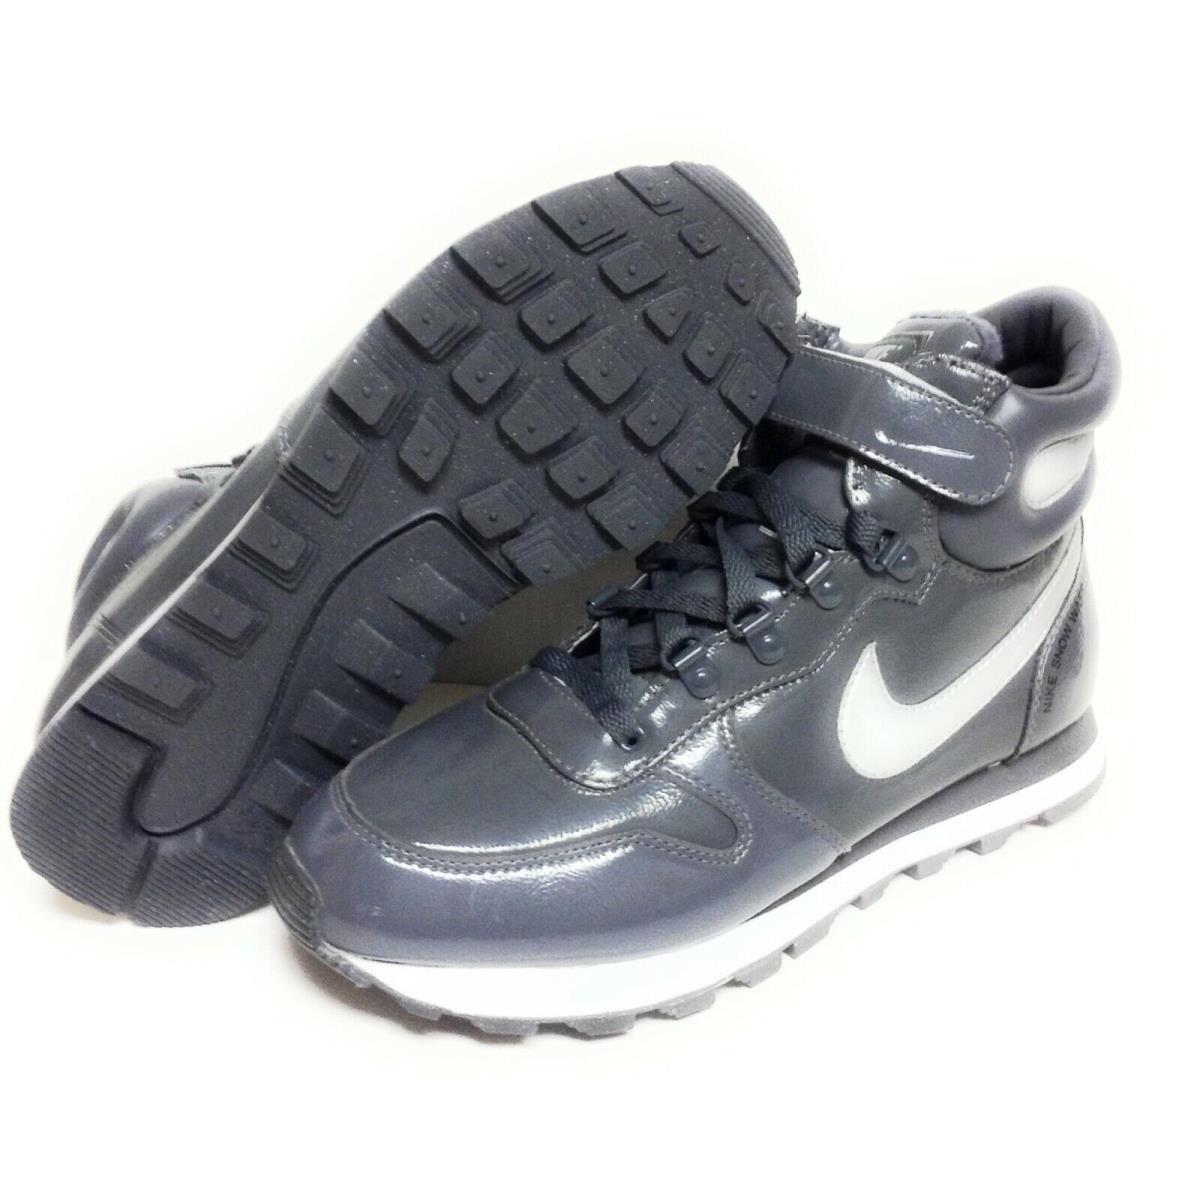 Womens Nike Snow Waffle CL 371758 002 Dark Grey 2009 Deadstock Sneakers Shoes